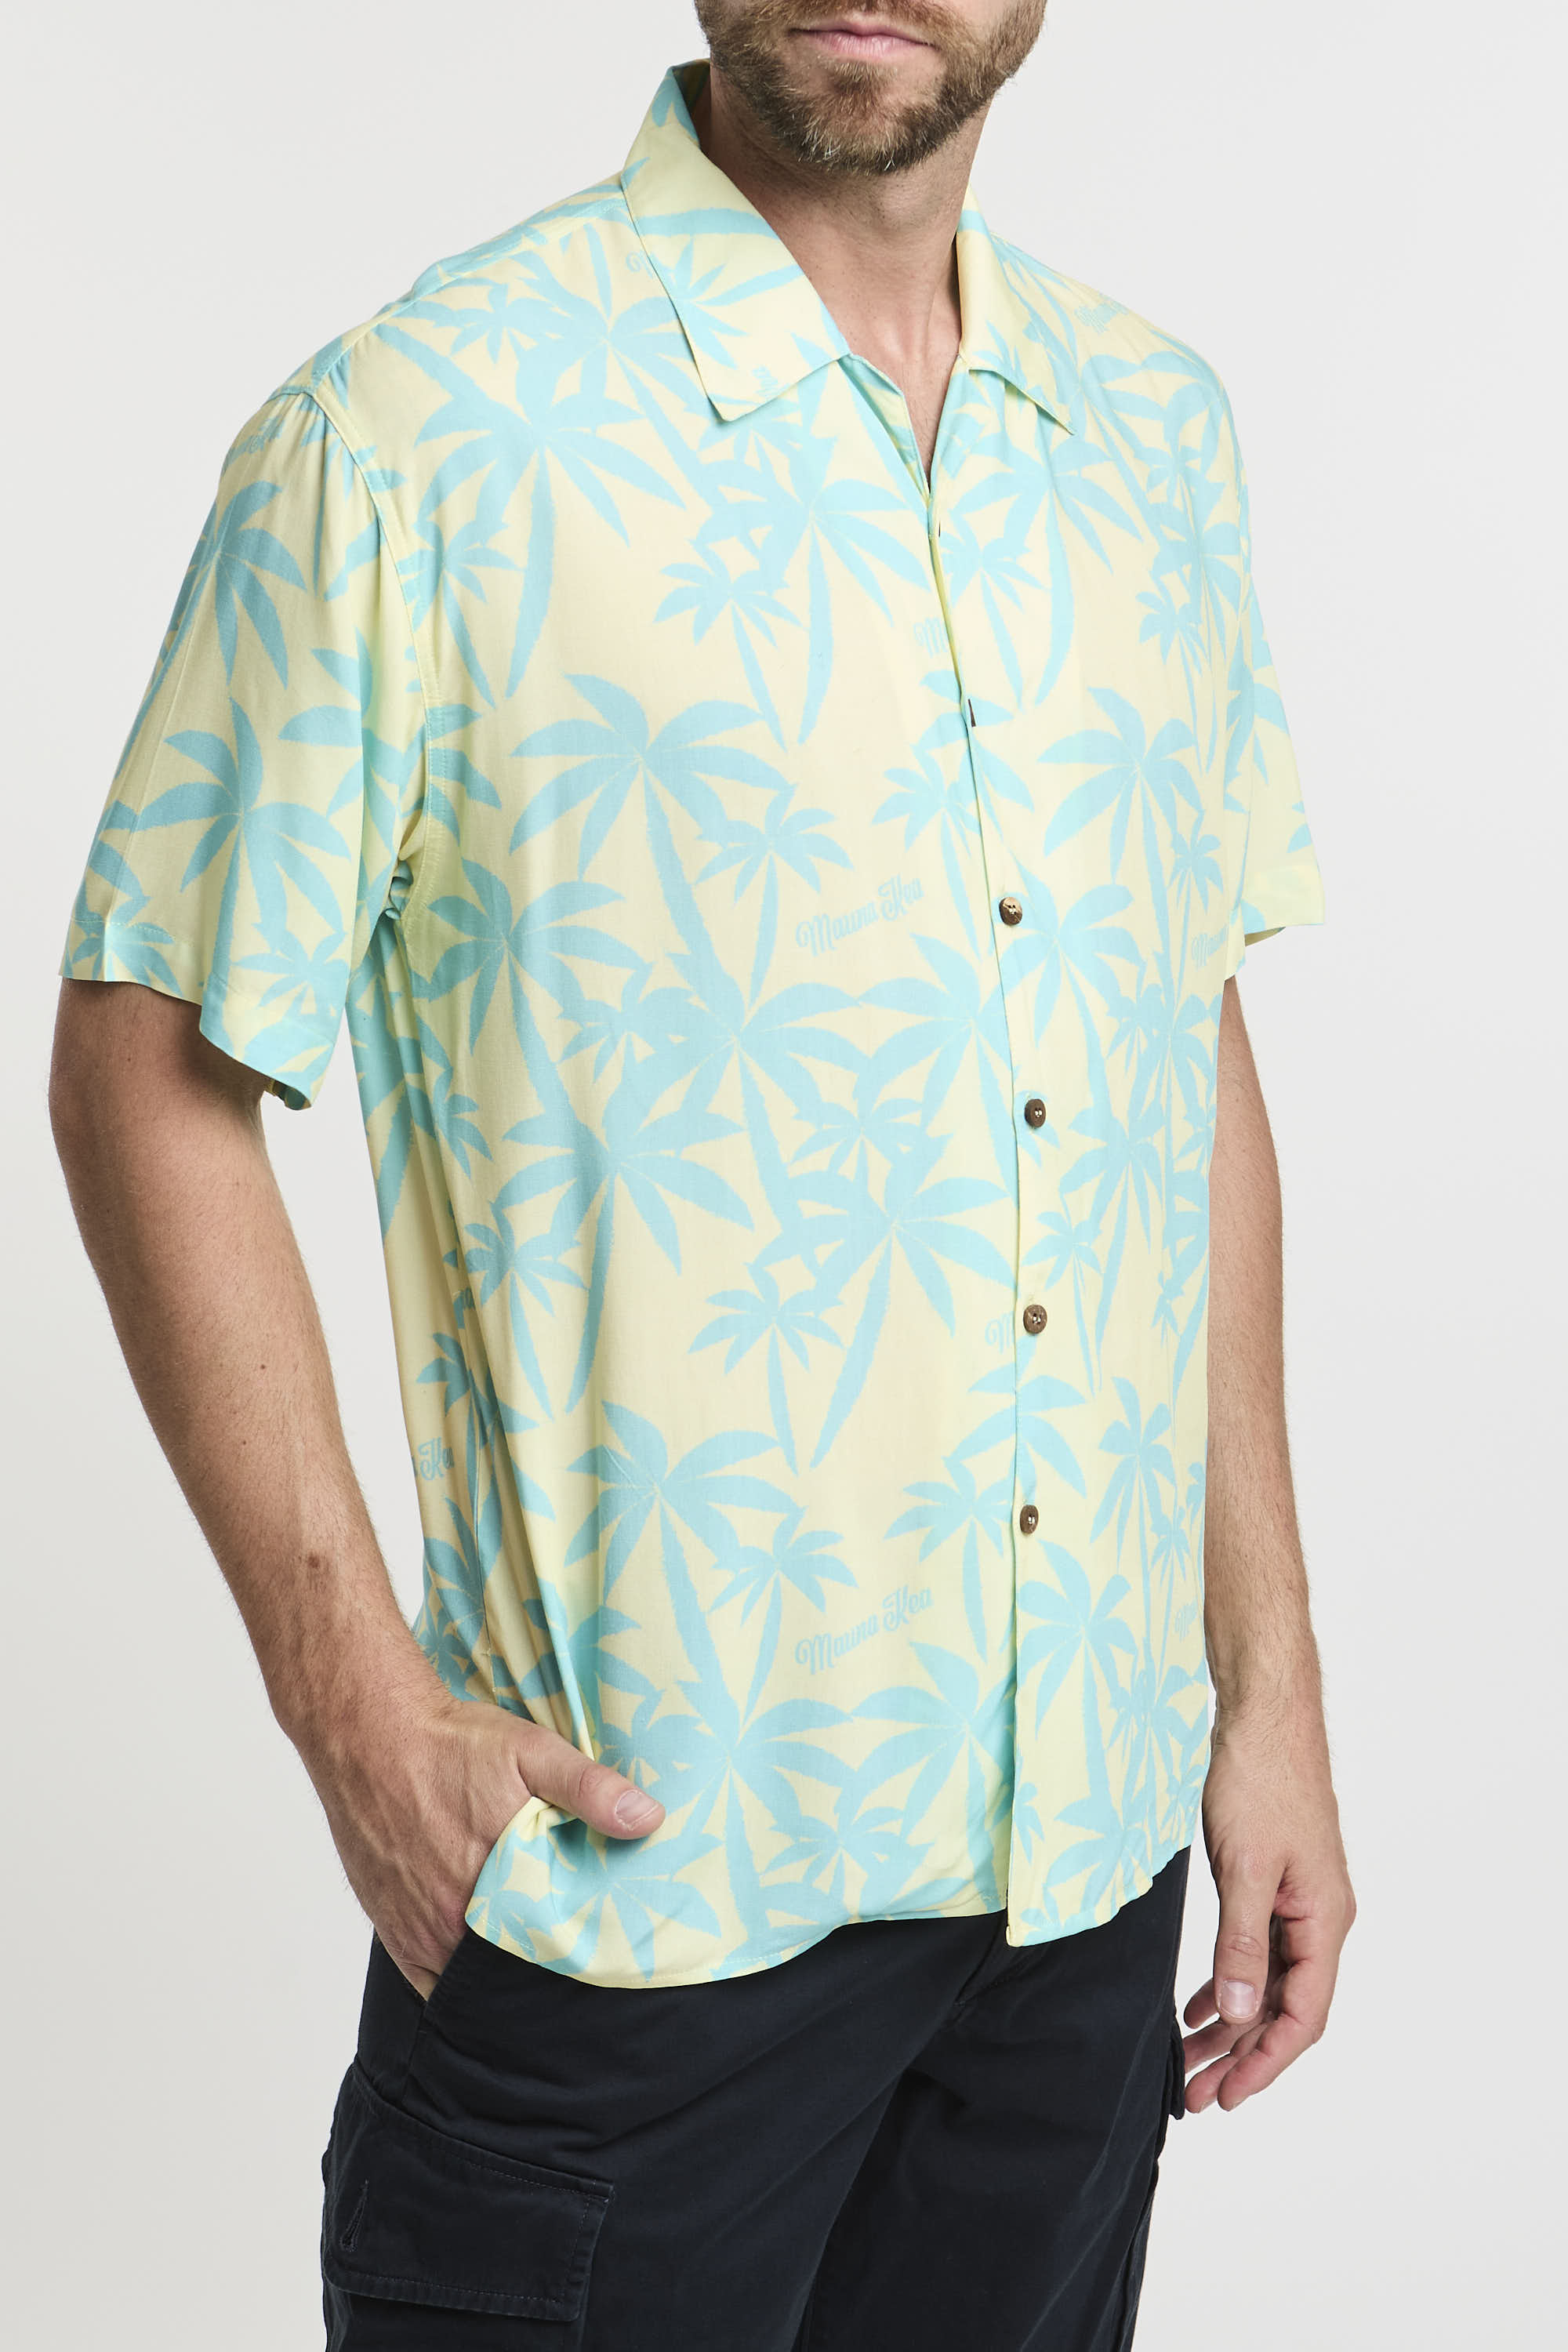 Mauna Kea Printed All Over Viscose Shirt in Yellow-4